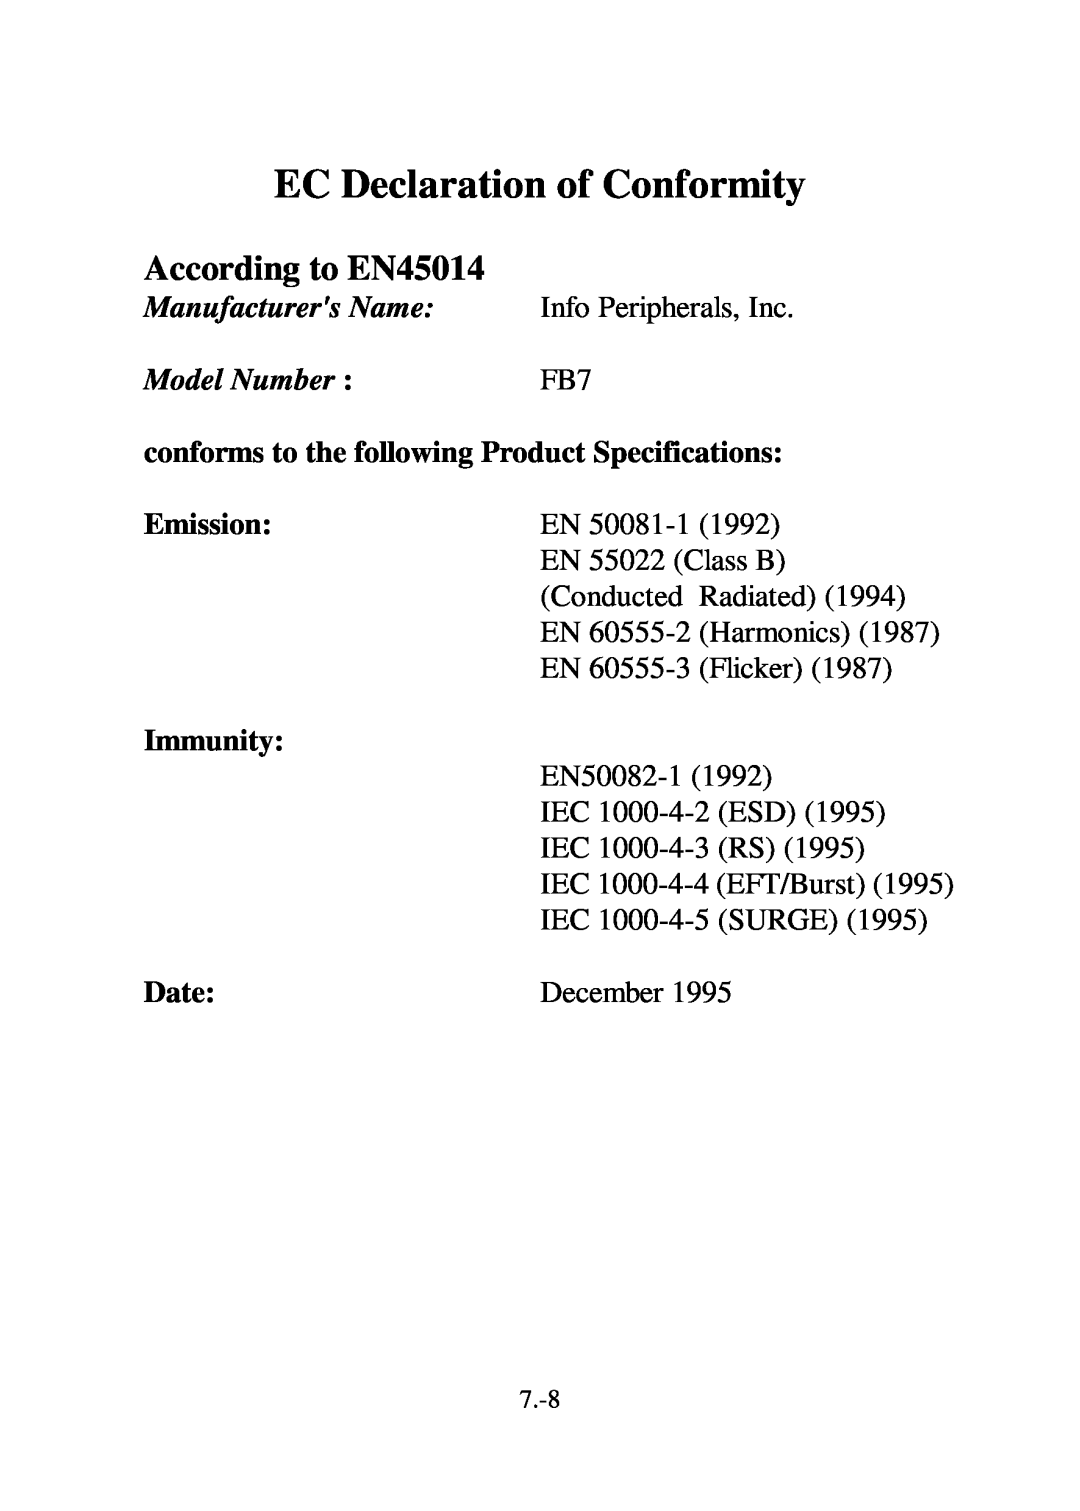 IBM Ricoh FB735 EC Declaration of Conformity, According to EN45014, Manufacturers Name, Info Peripherals, Inc, Date 